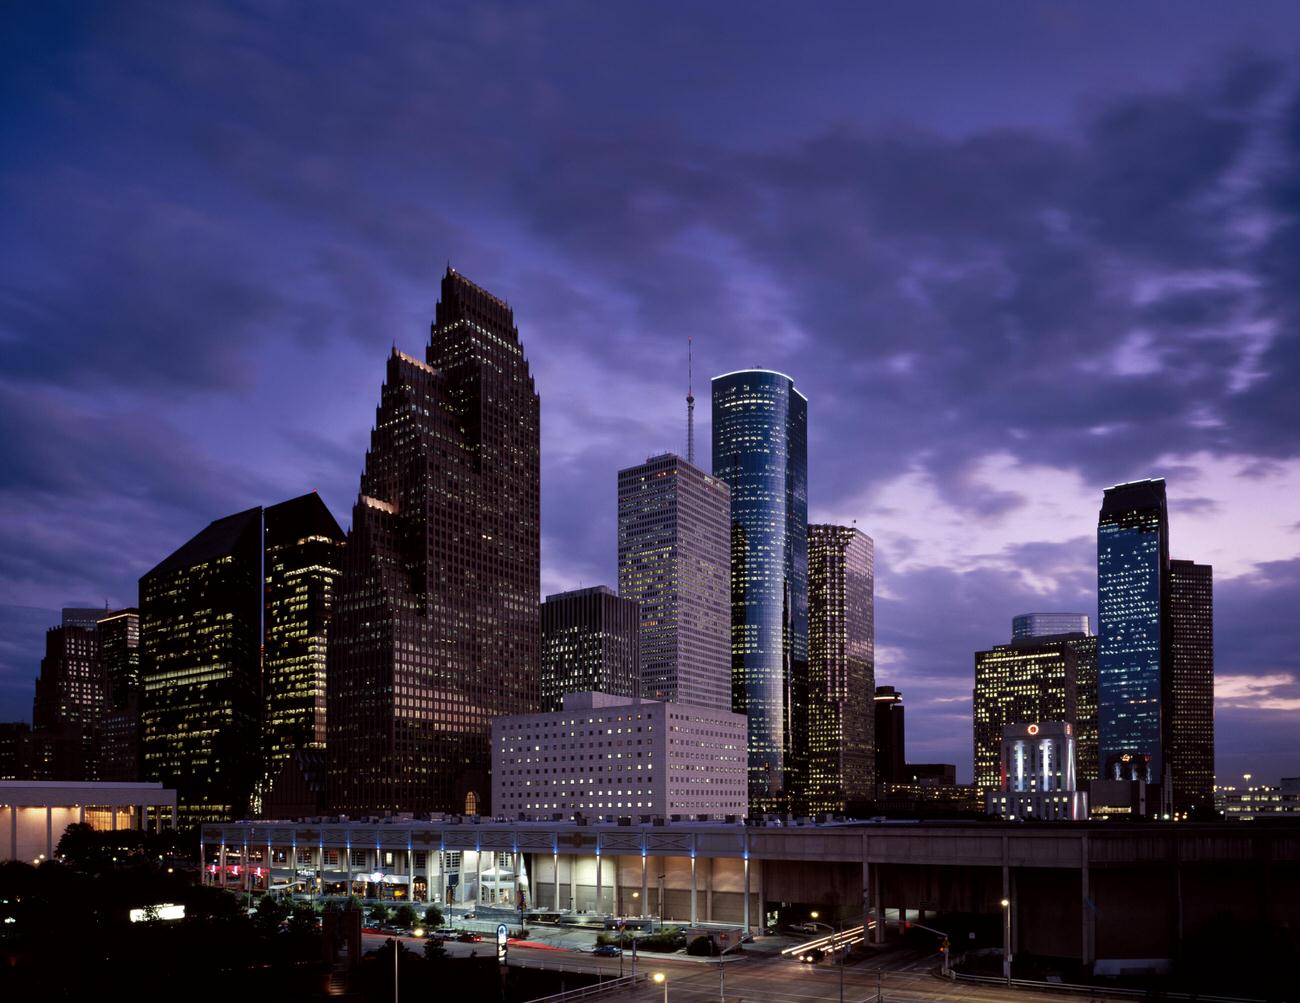 Twilight scene in Houston, Texas, 1990s